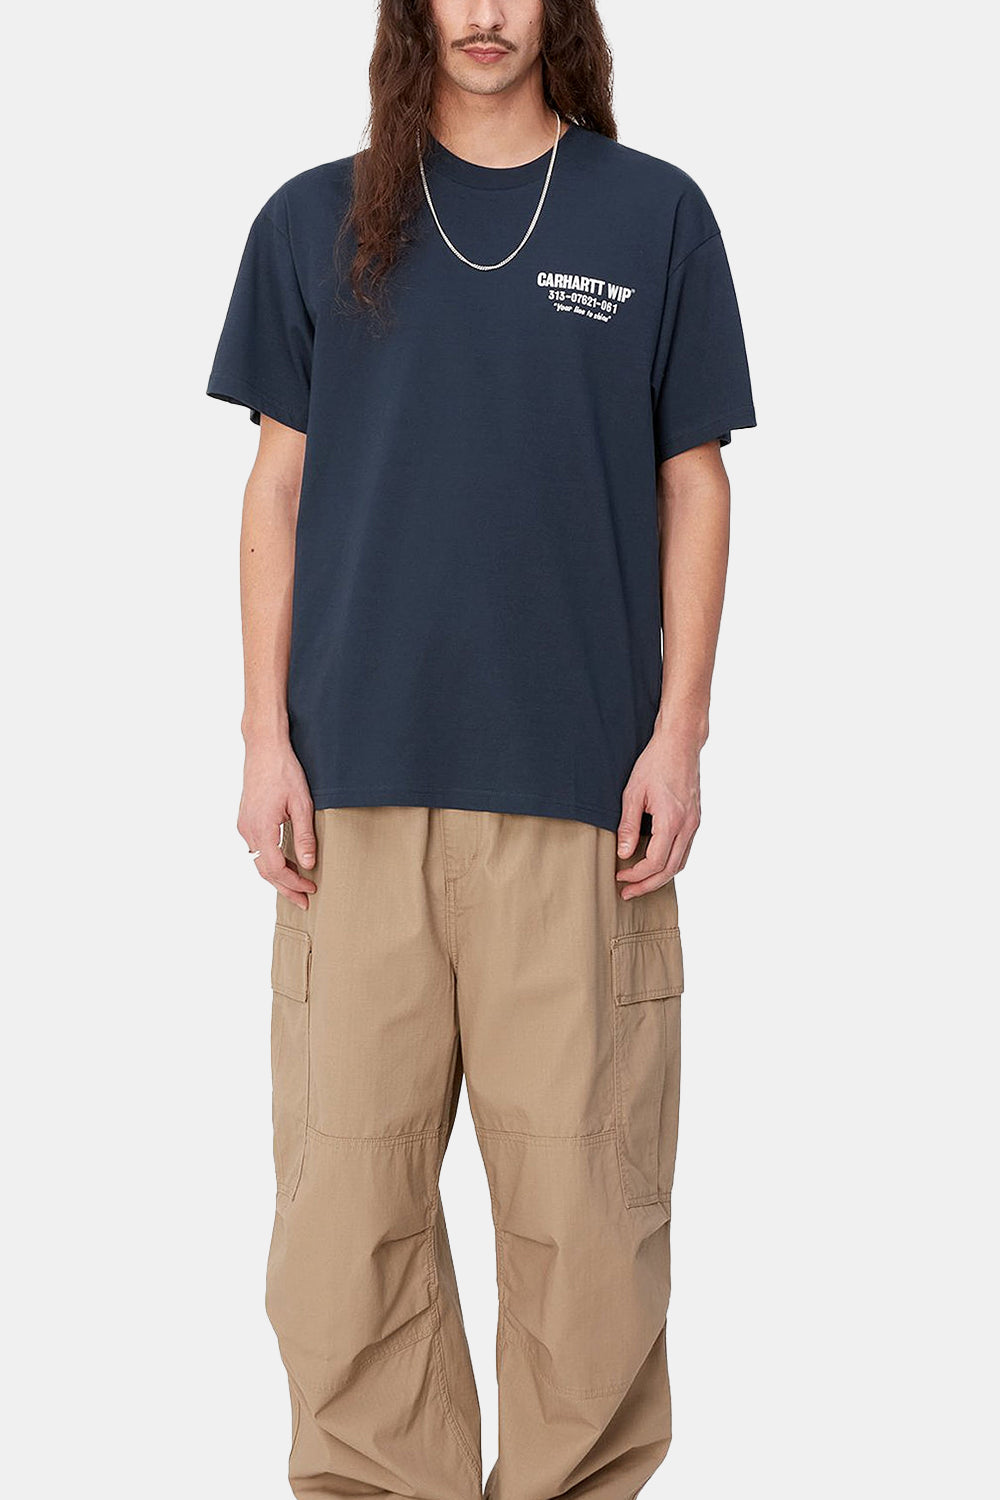 Carhartt WIP Short Sleeve Less Troubles T-Shirt (Blue/Wax)